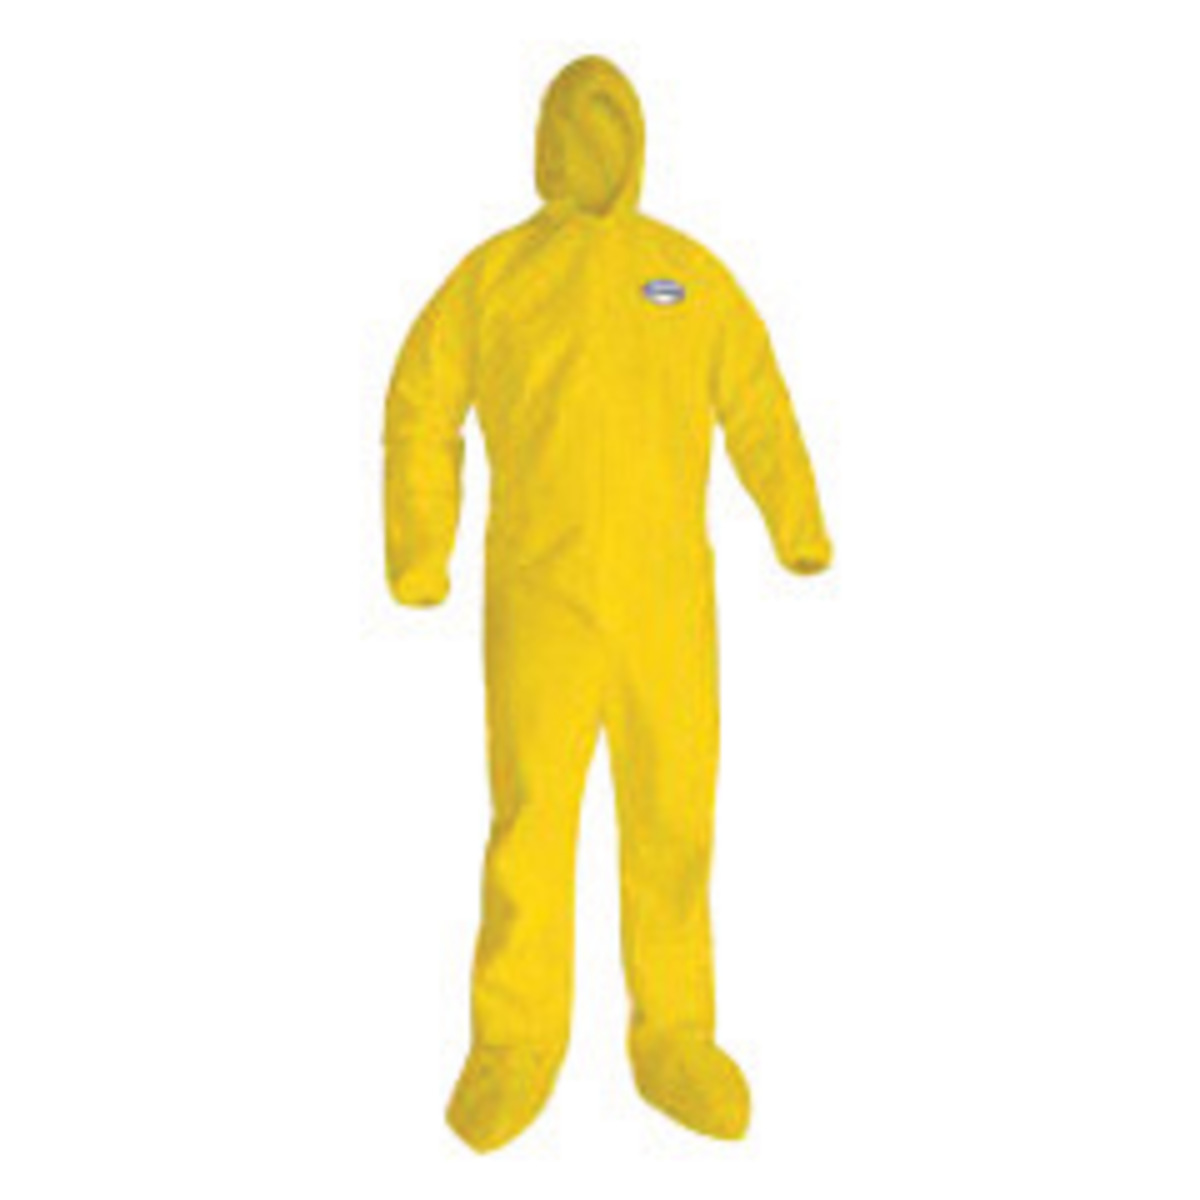 Kimberly-Clark Professional* Medium Yellow KleenGuard* A70 1.5 mil Polpropylene/Polyethylene Coveralls (Availability restriction